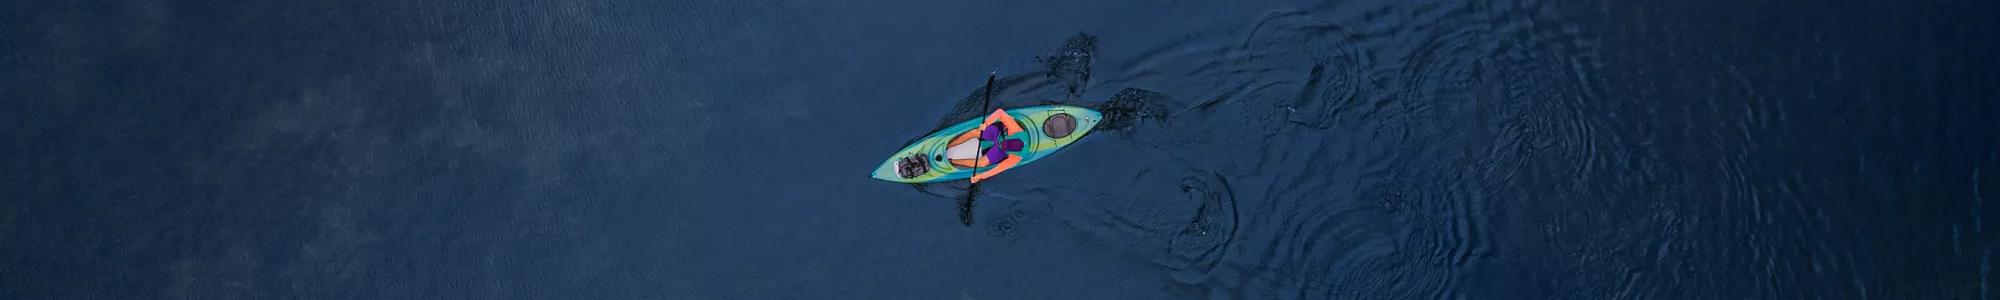 Pelican kayaks en solde